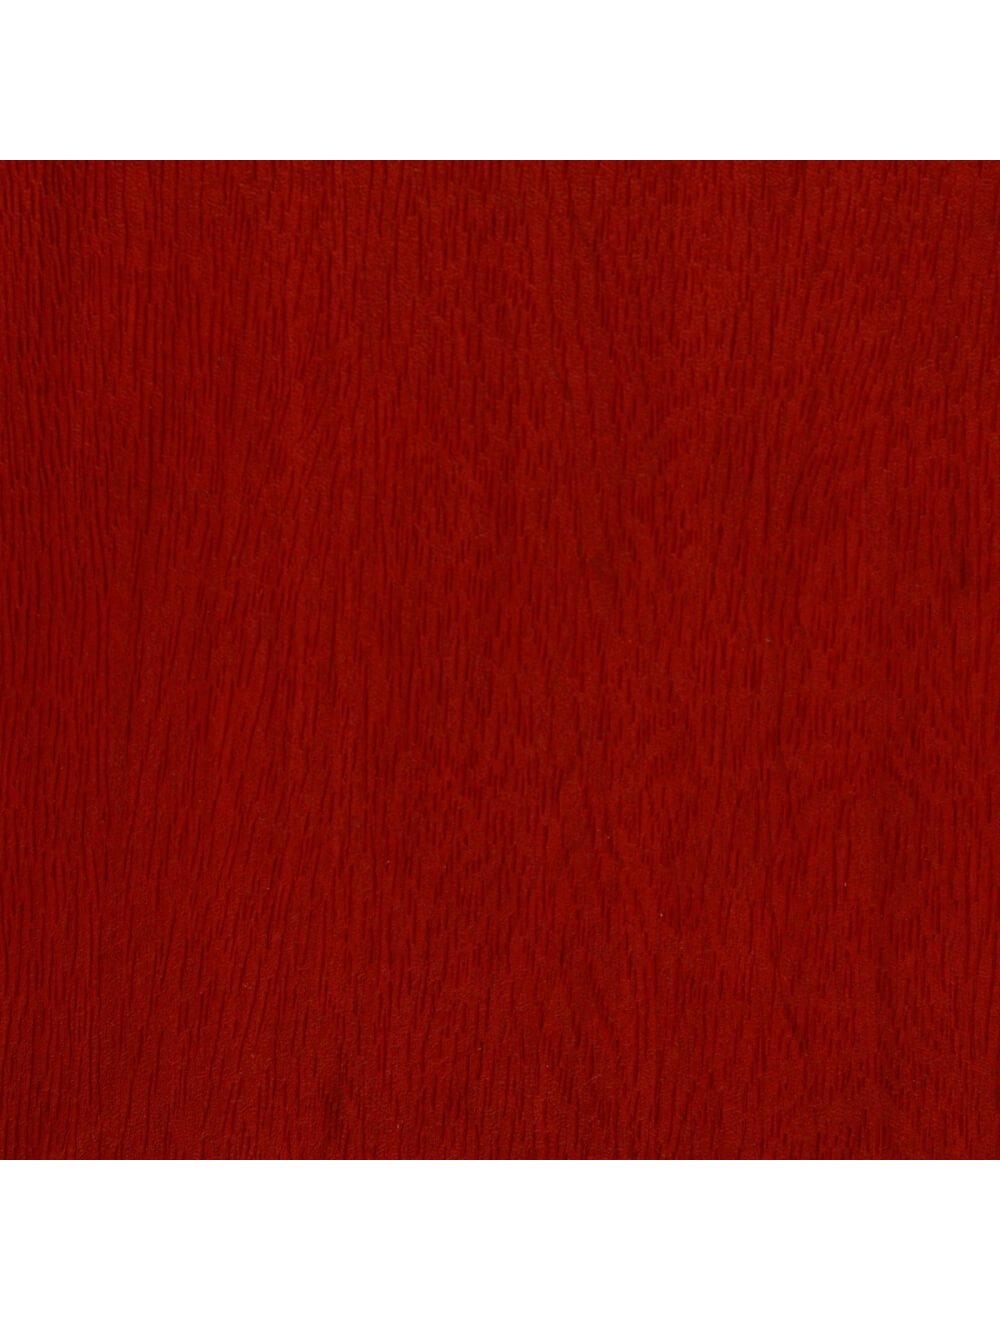 Washington vörös fa gabona anyagminta (E948)